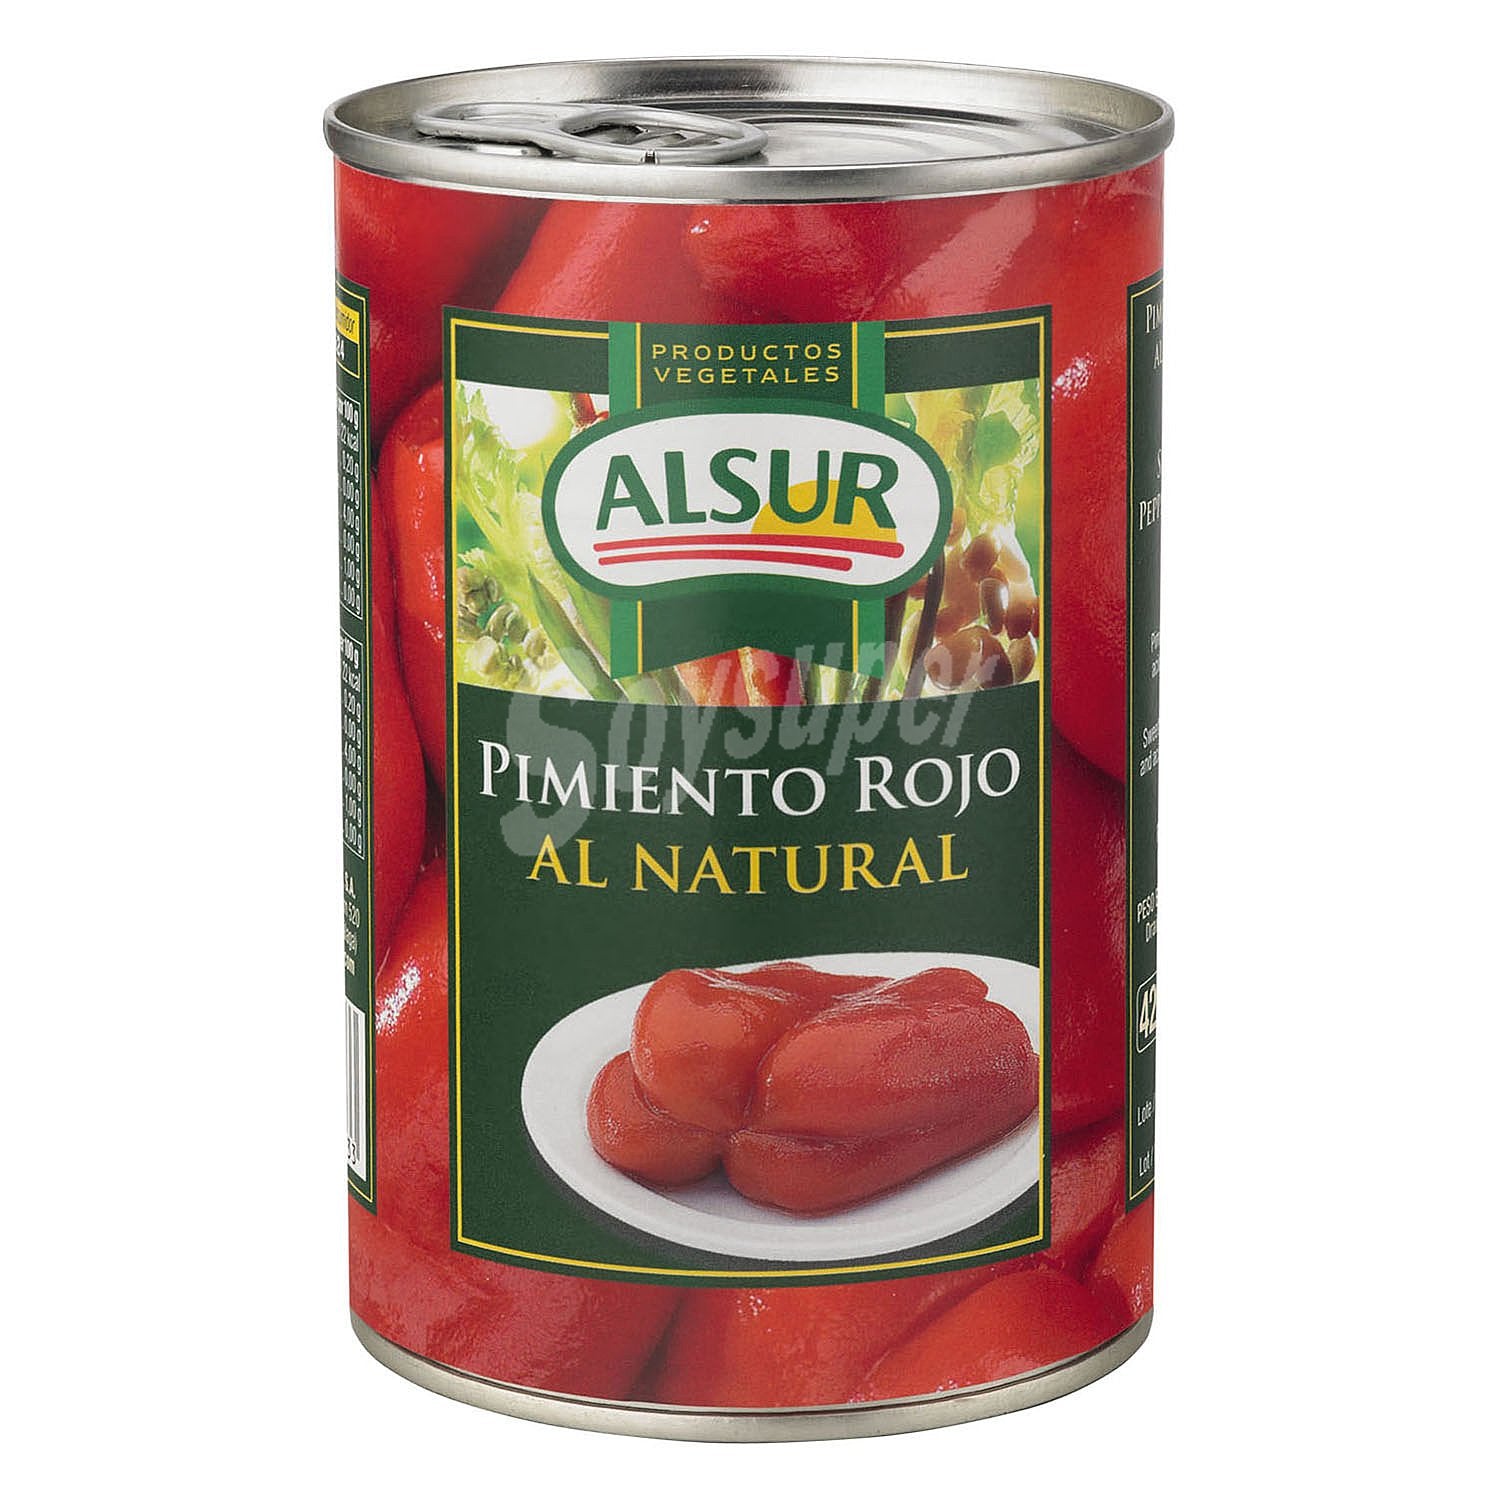 Pimiento rojo Alsur, peso neto 390gr